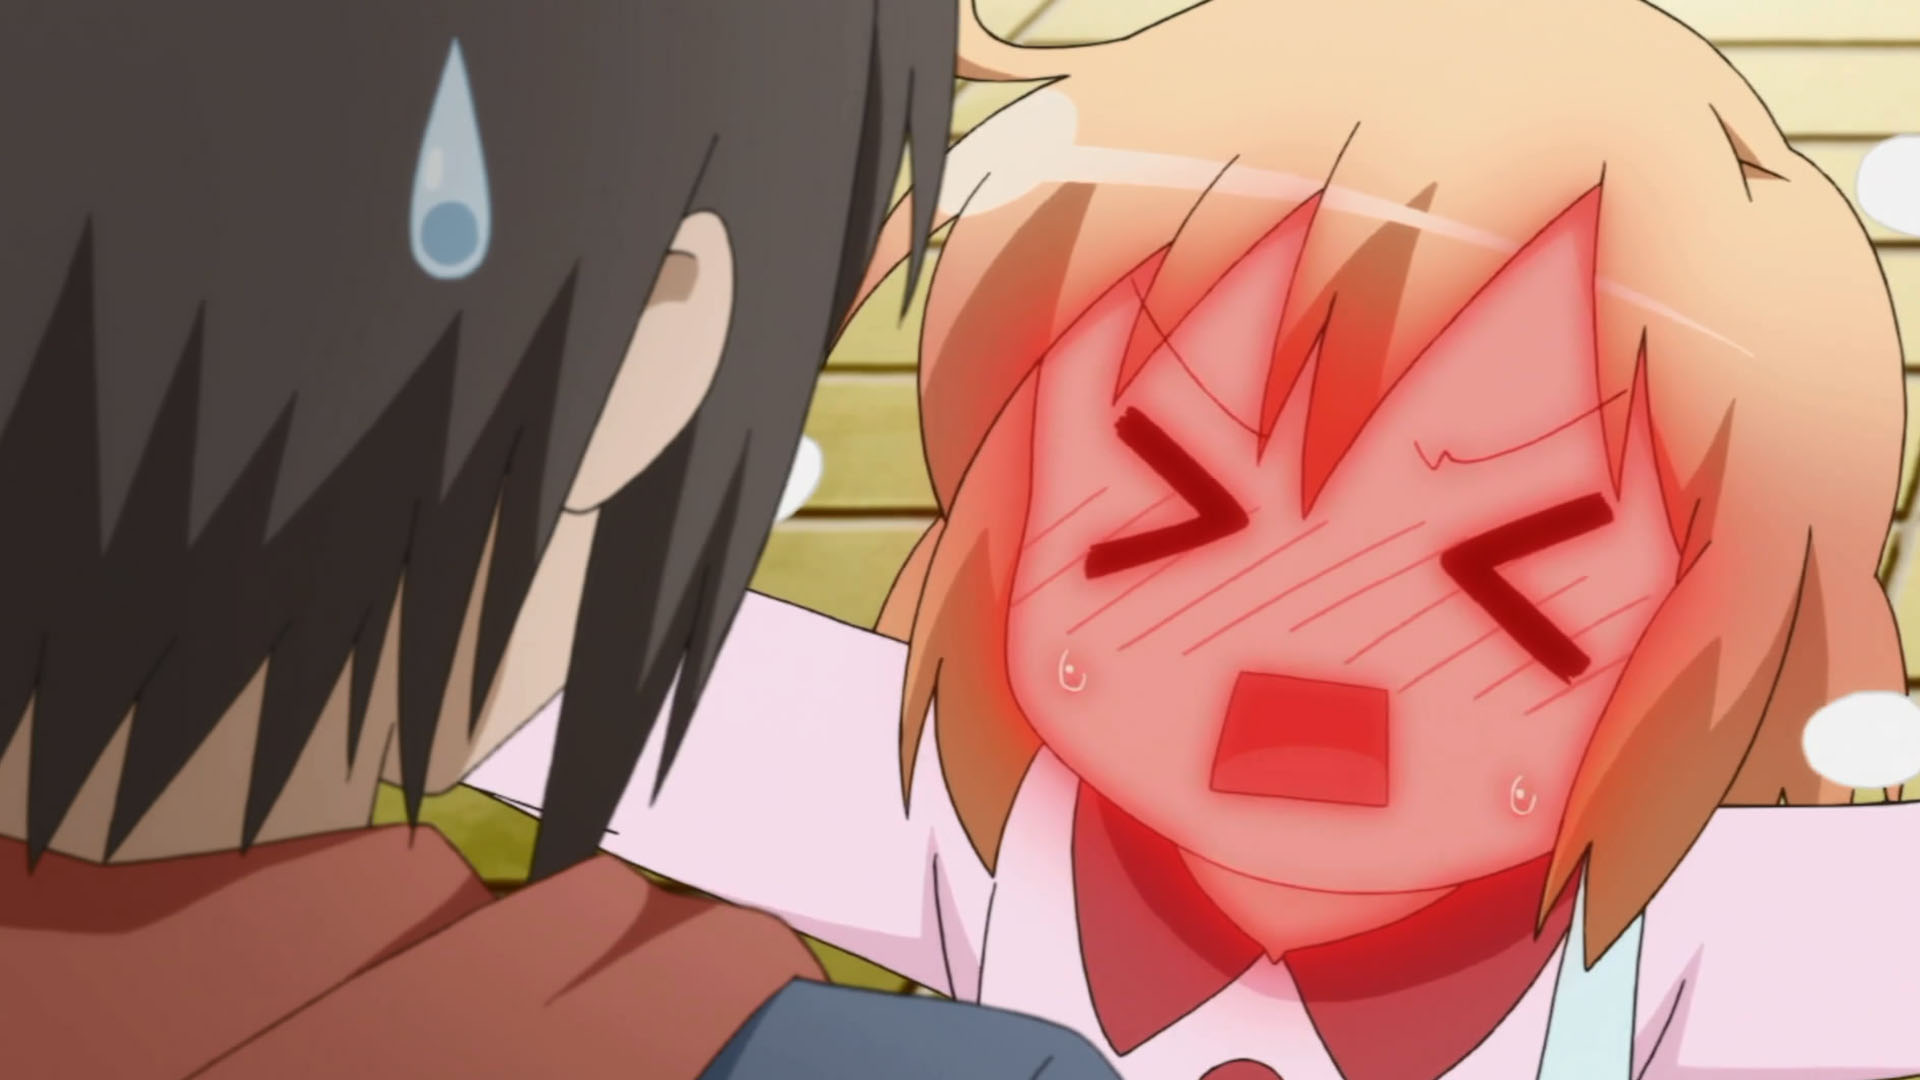 Kotoura-san': The Funniest 10 Minutes in Anime — Steemit